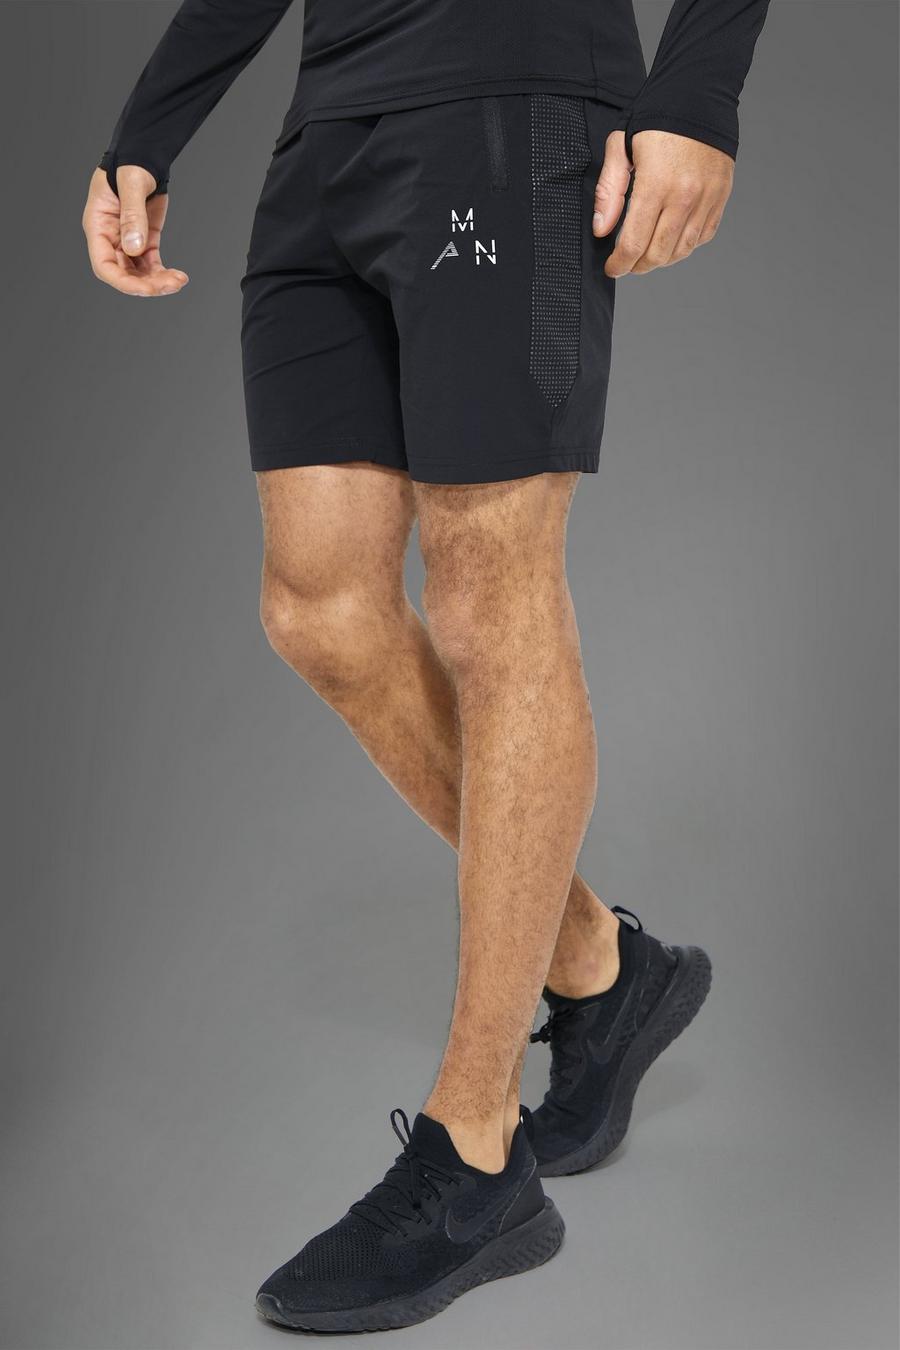 Pantalón corto MAN Active deportivo con panel reflectante, Black nero